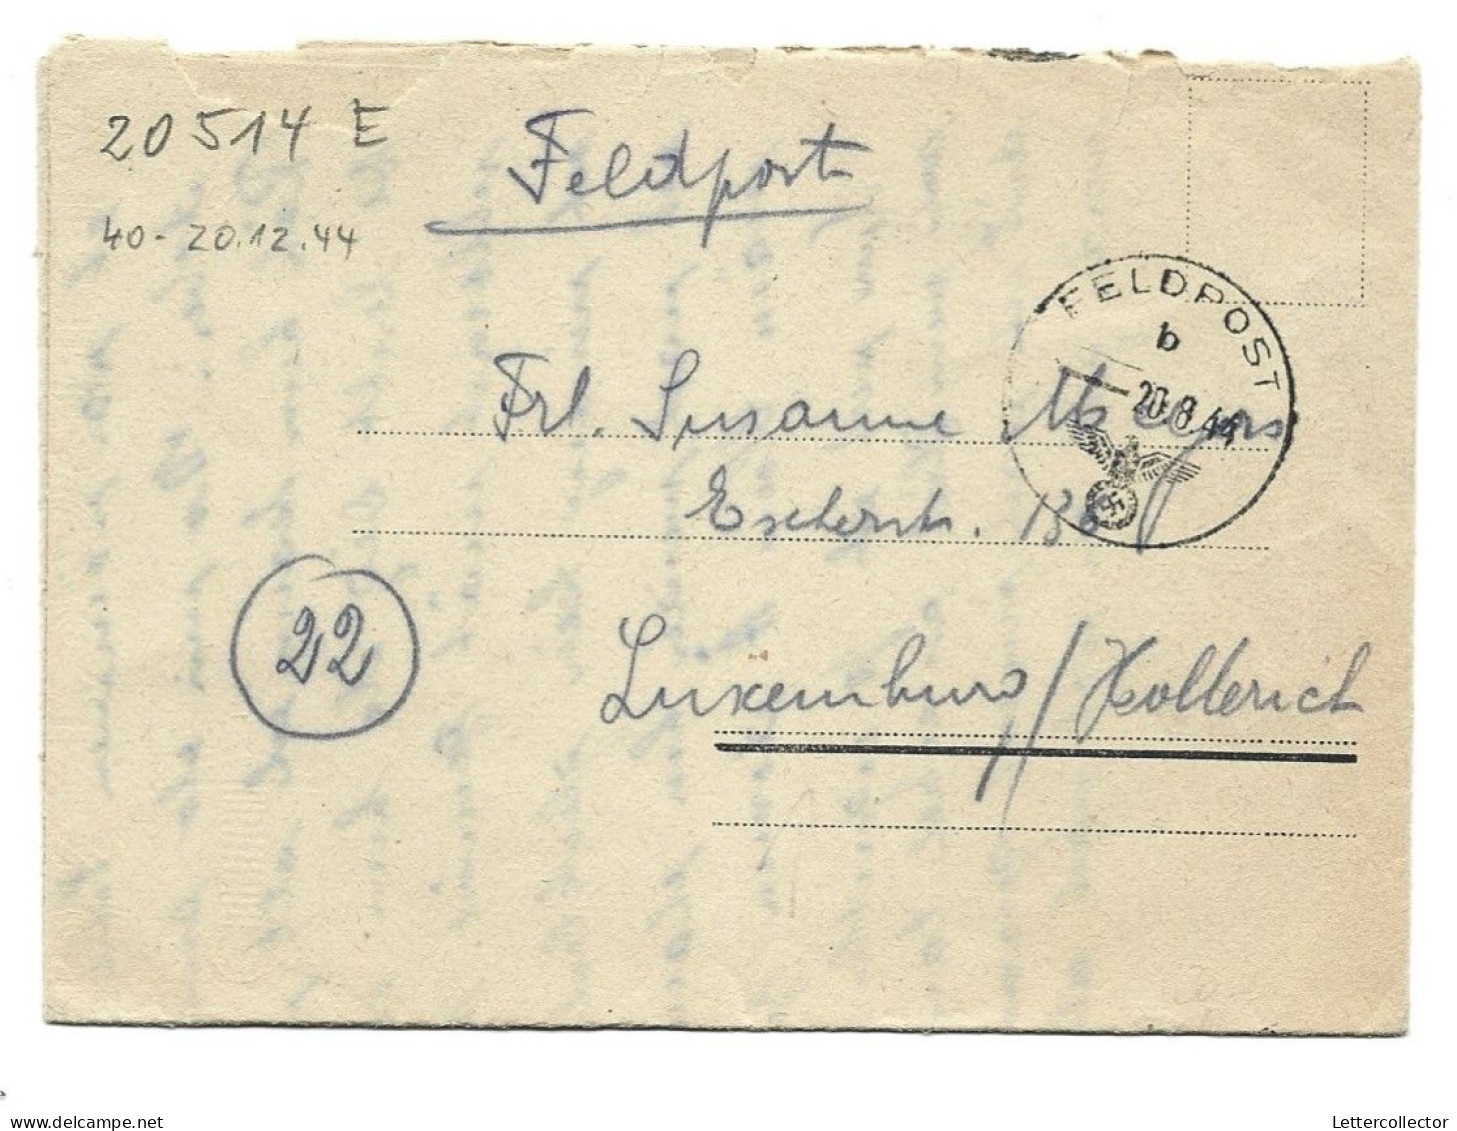 Feldpost Luxemburg 1944 Grenadier Lettland - Feldpost World War II